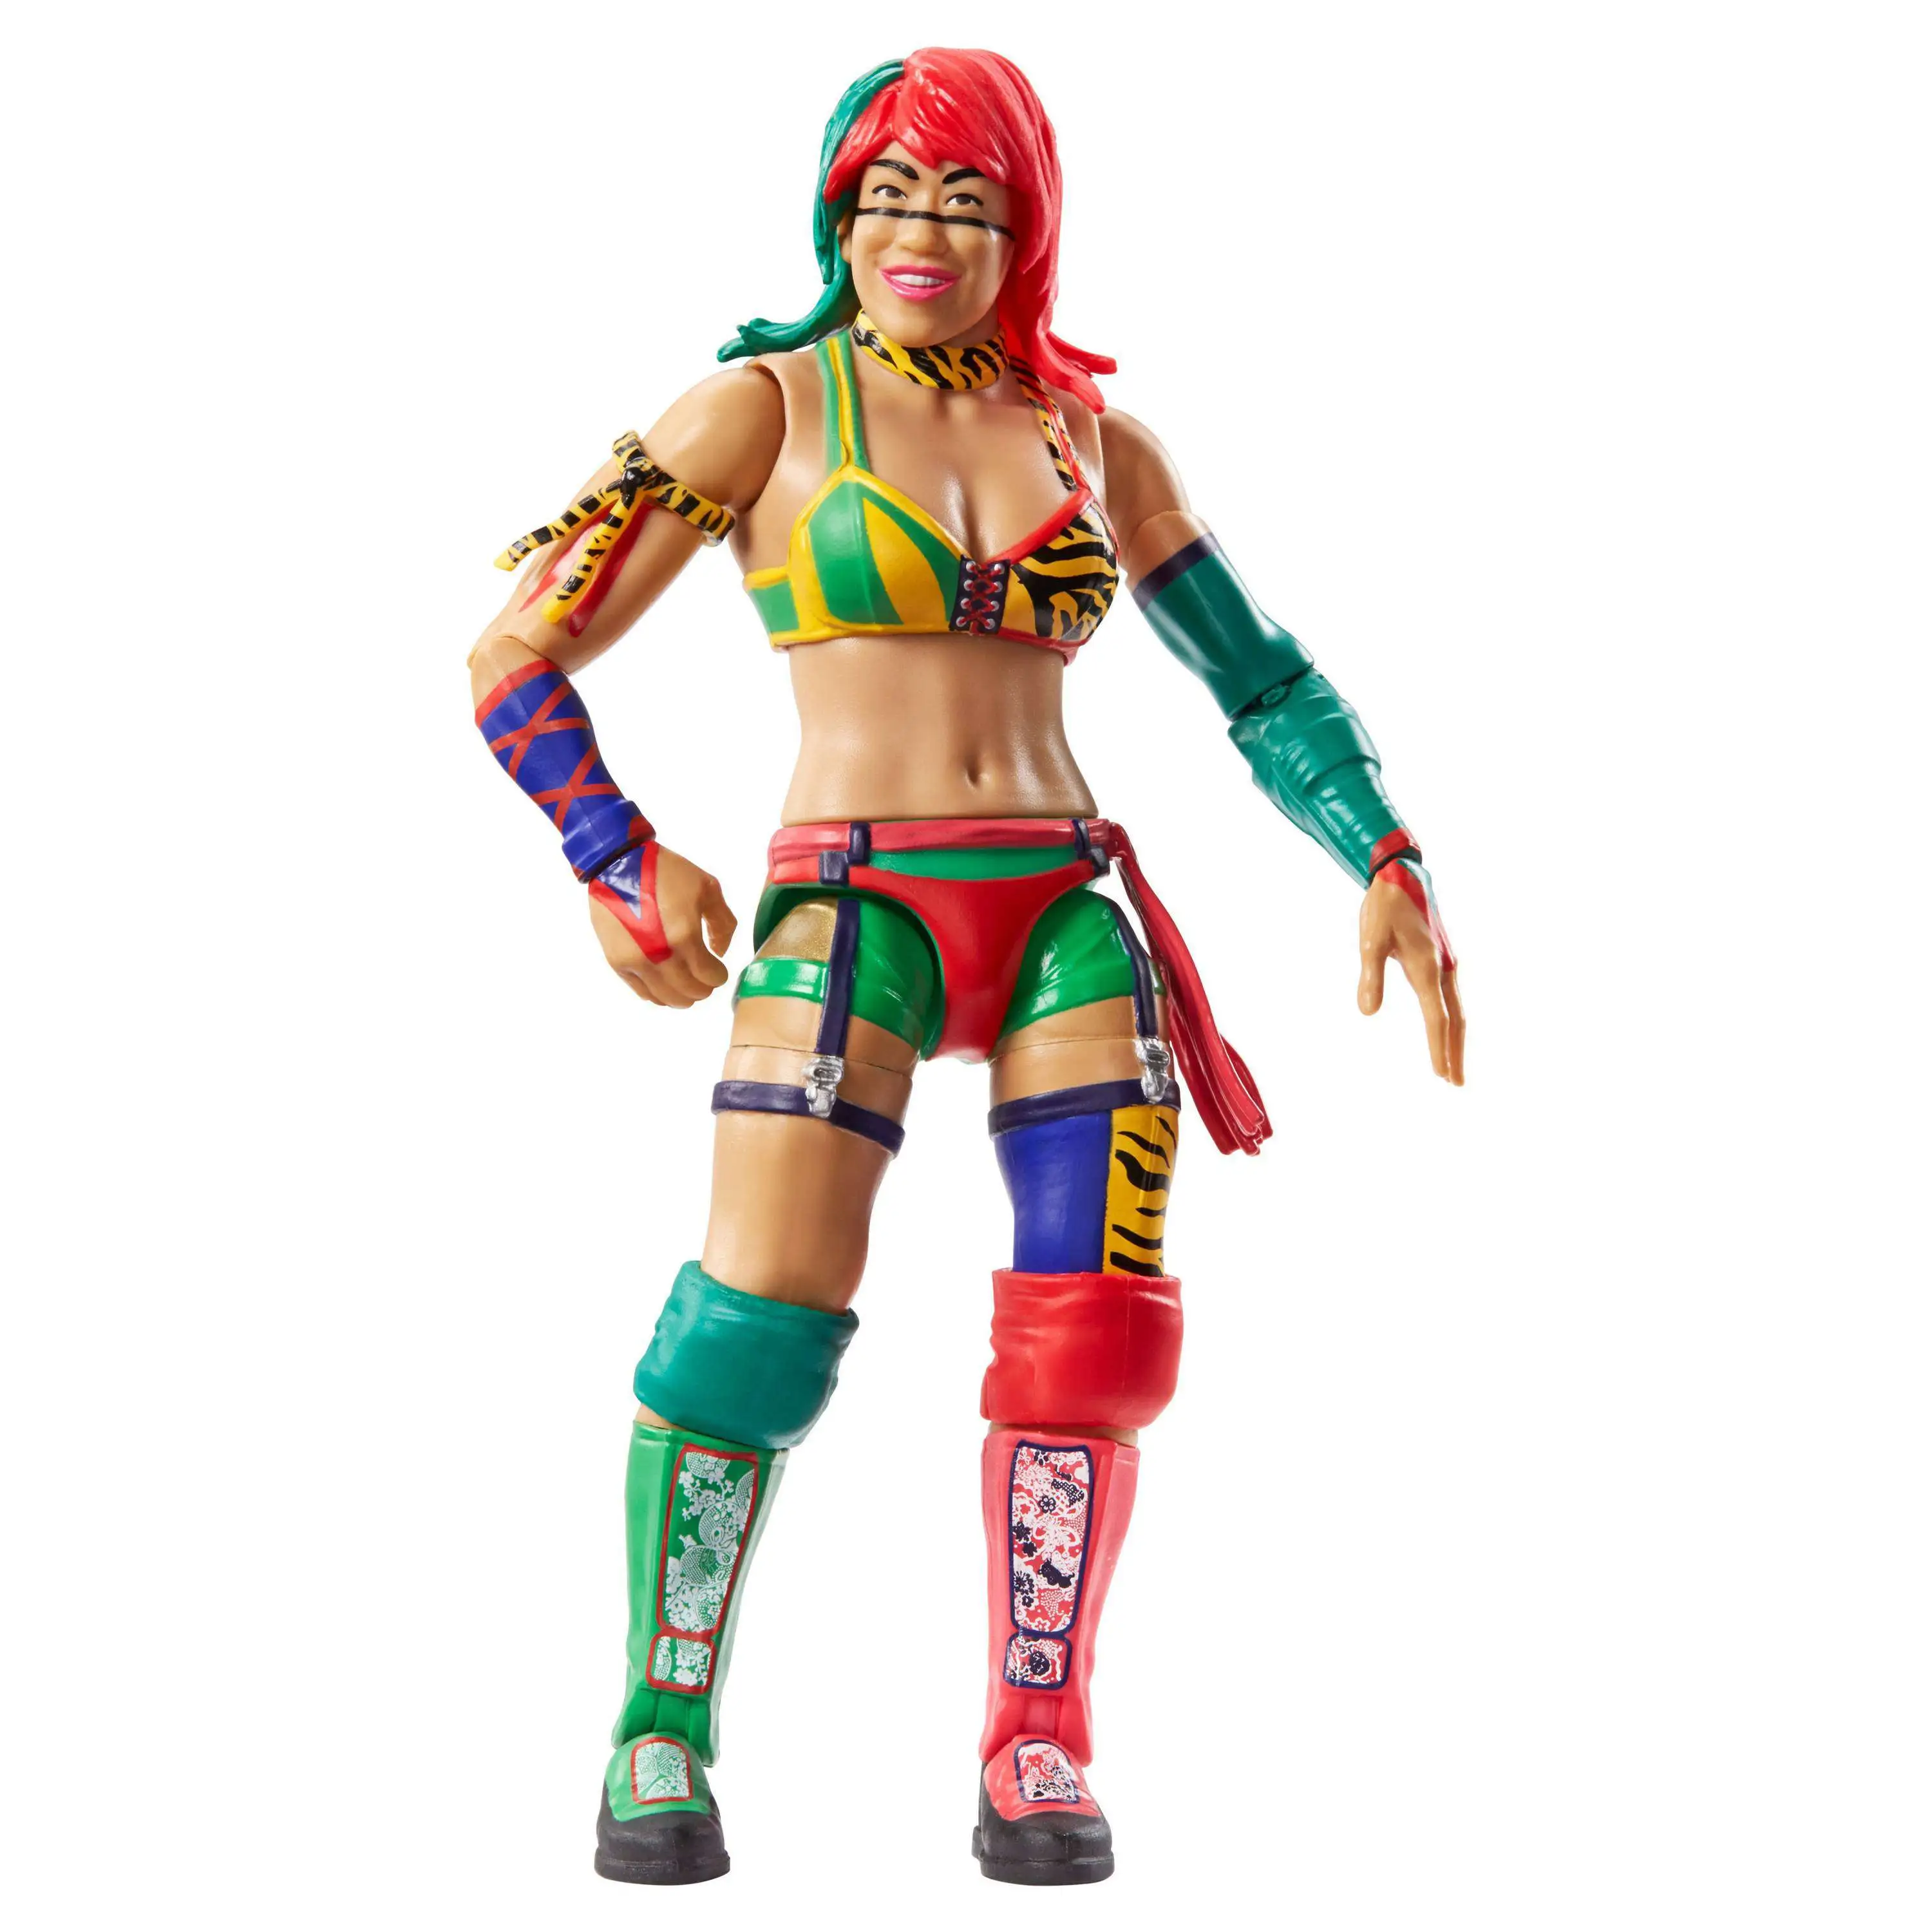 New Boxed WWE Mattel Wrestling Figure Elite NXT Takeover Series 2 Asuka 